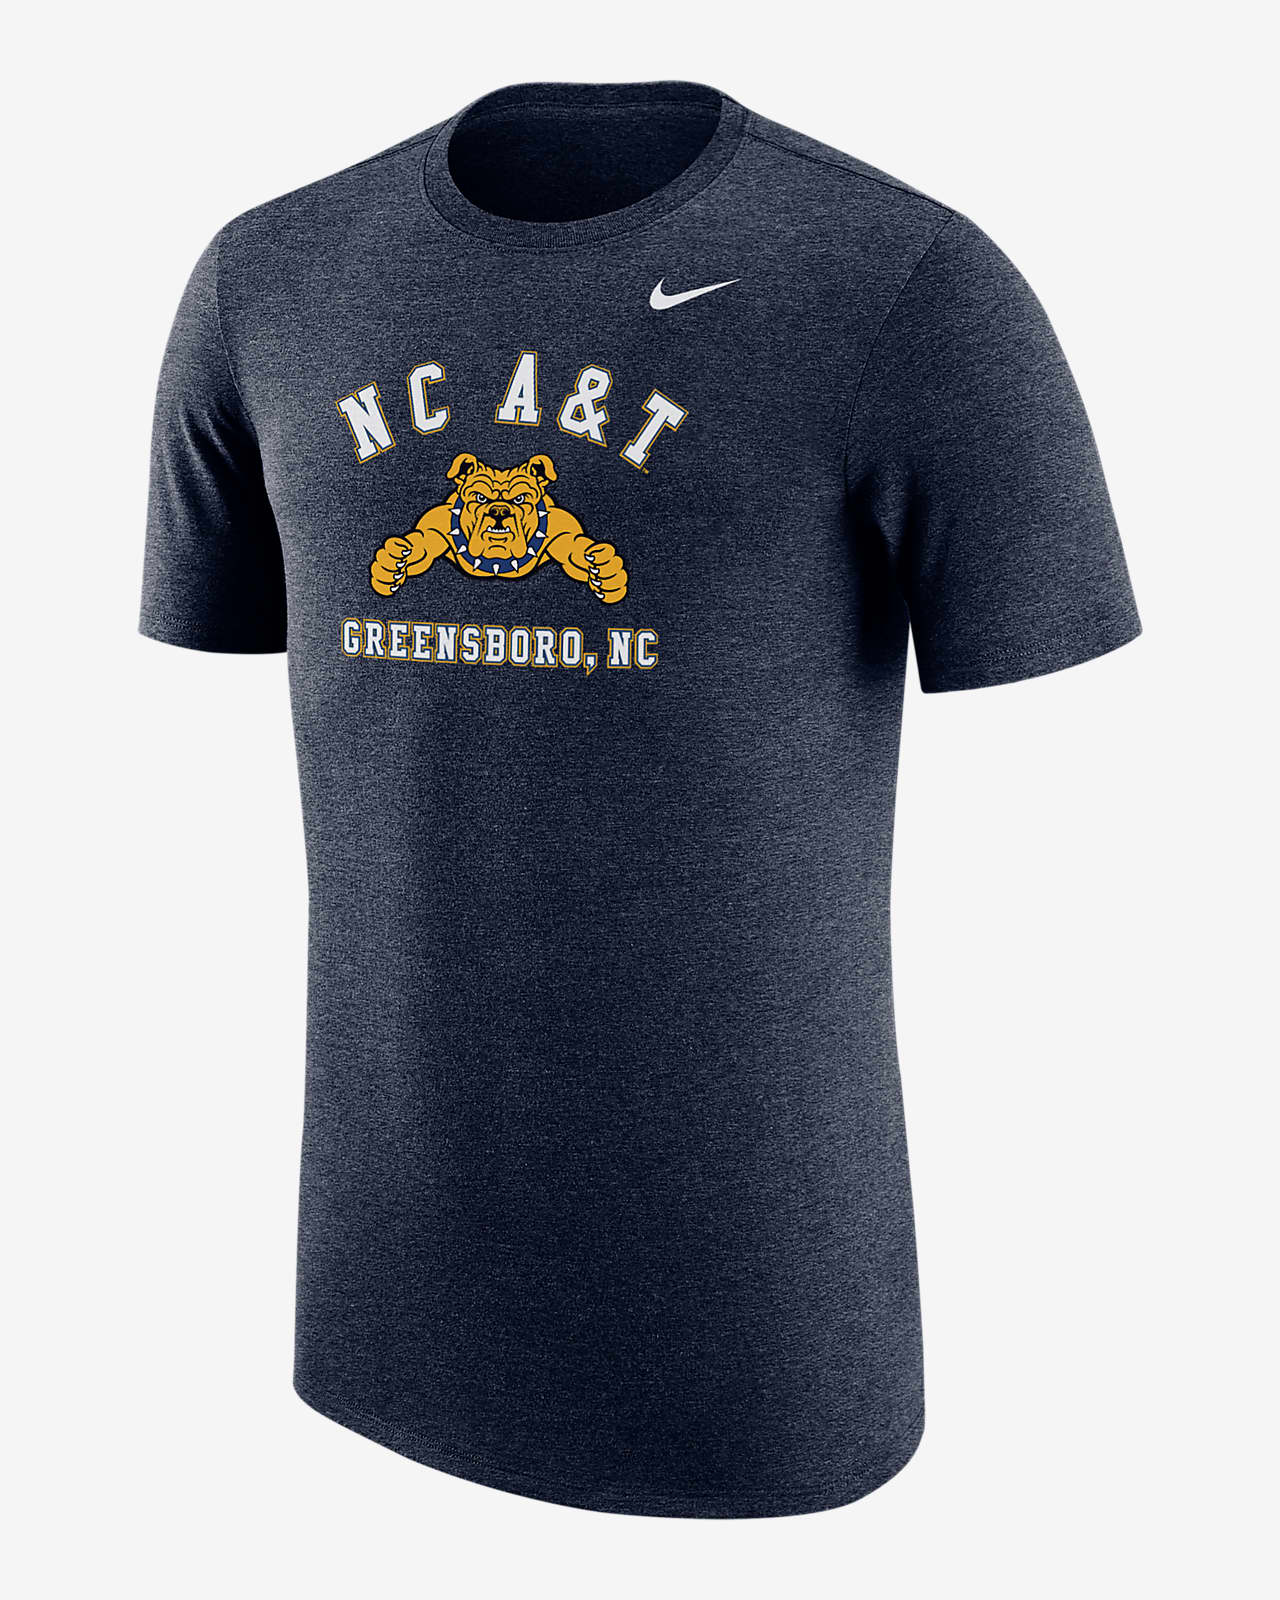 North Carolina A&T Men's Nike College T-Shirt